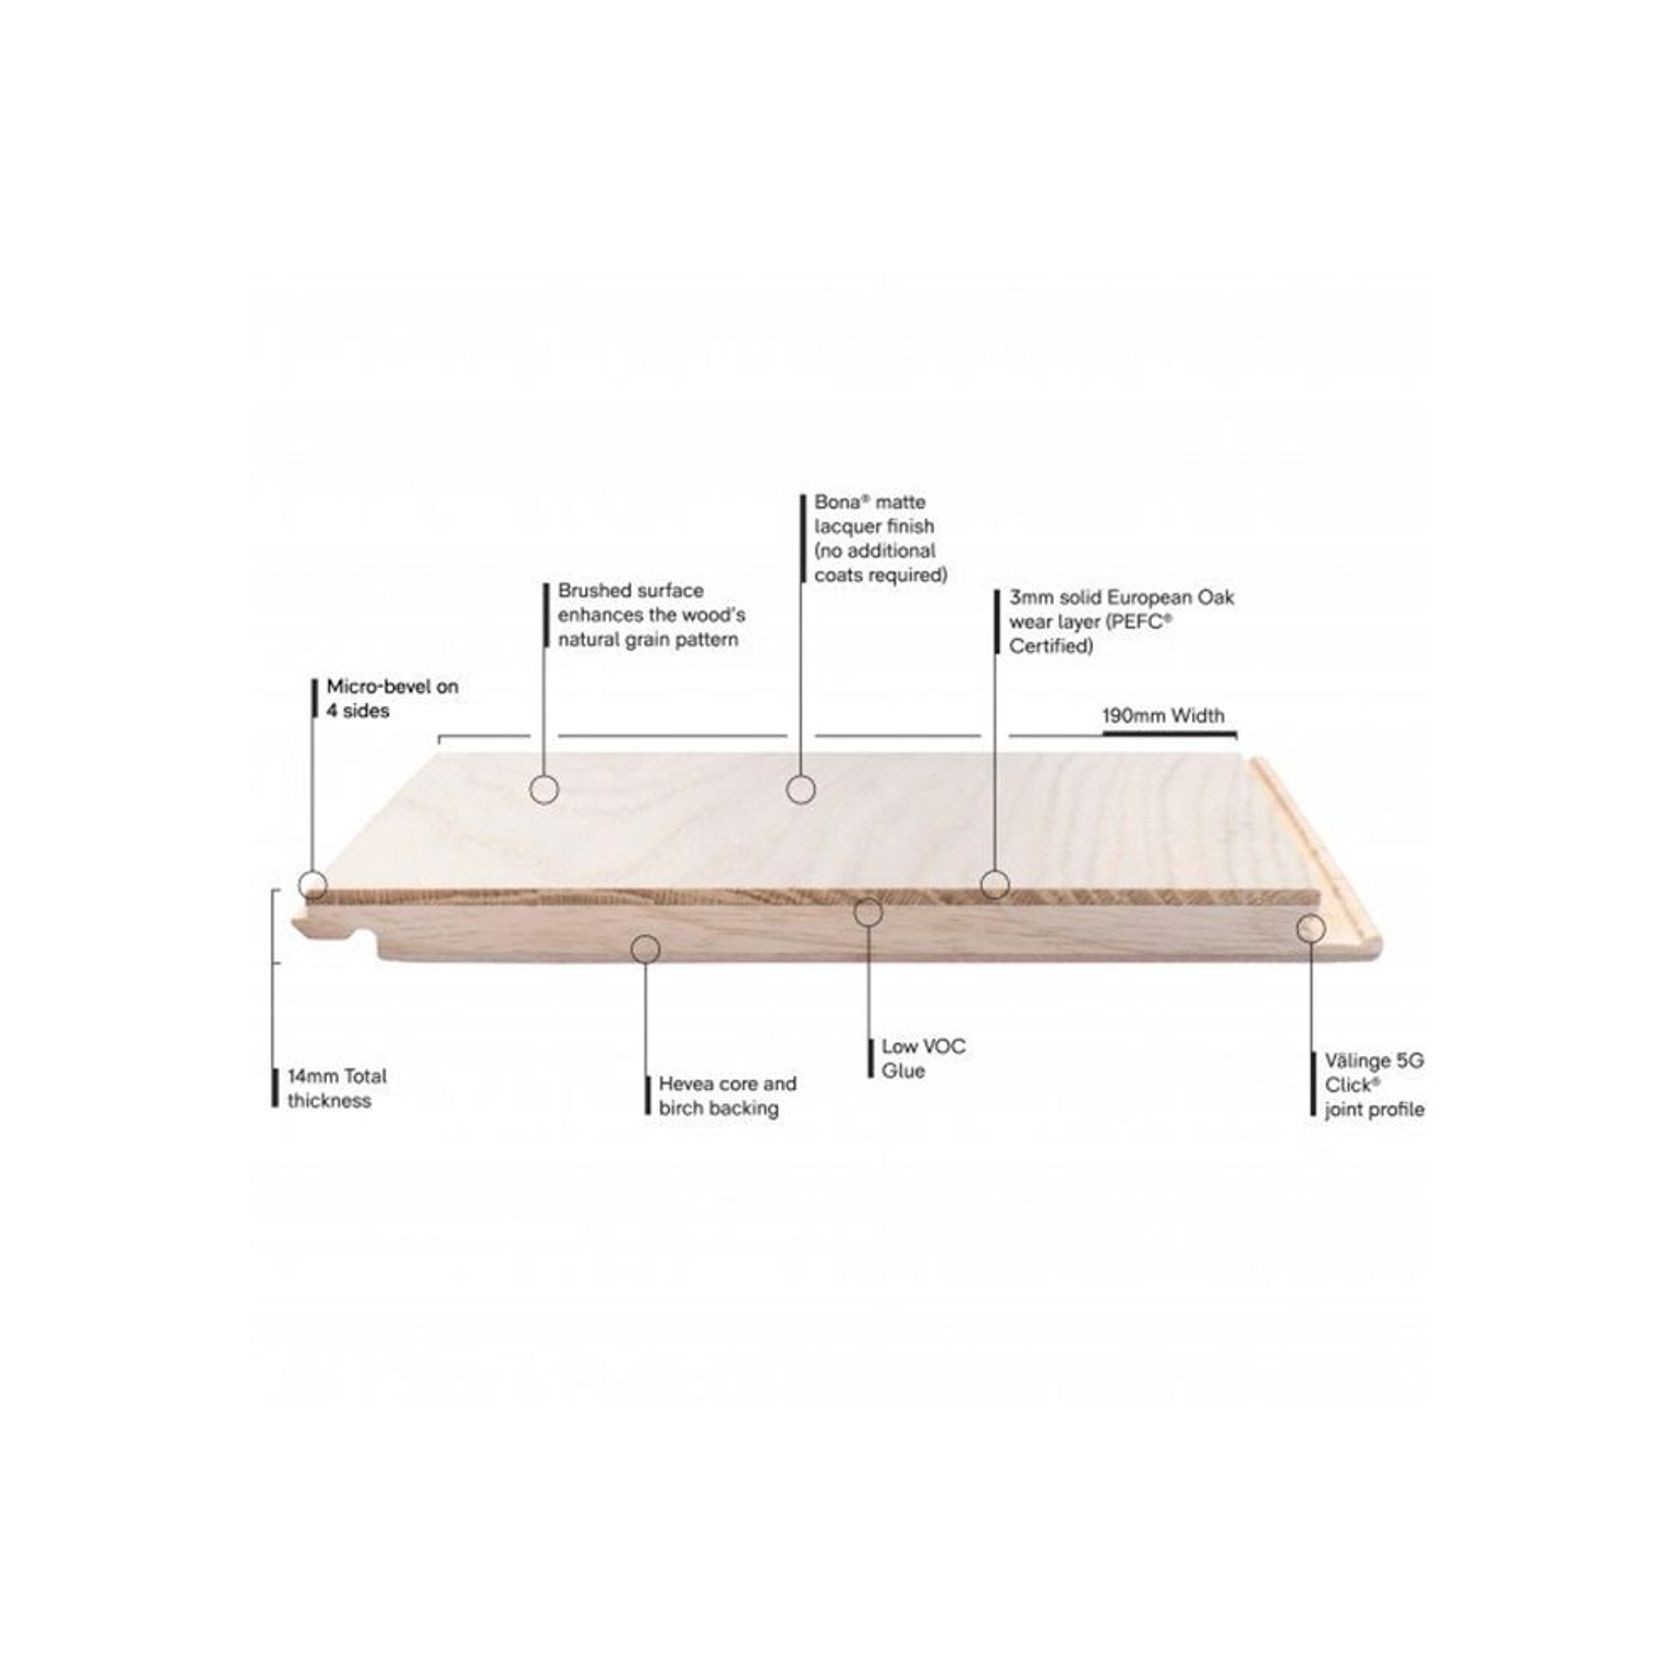 Copenhagen Feature Timber Flooring gallery detail image